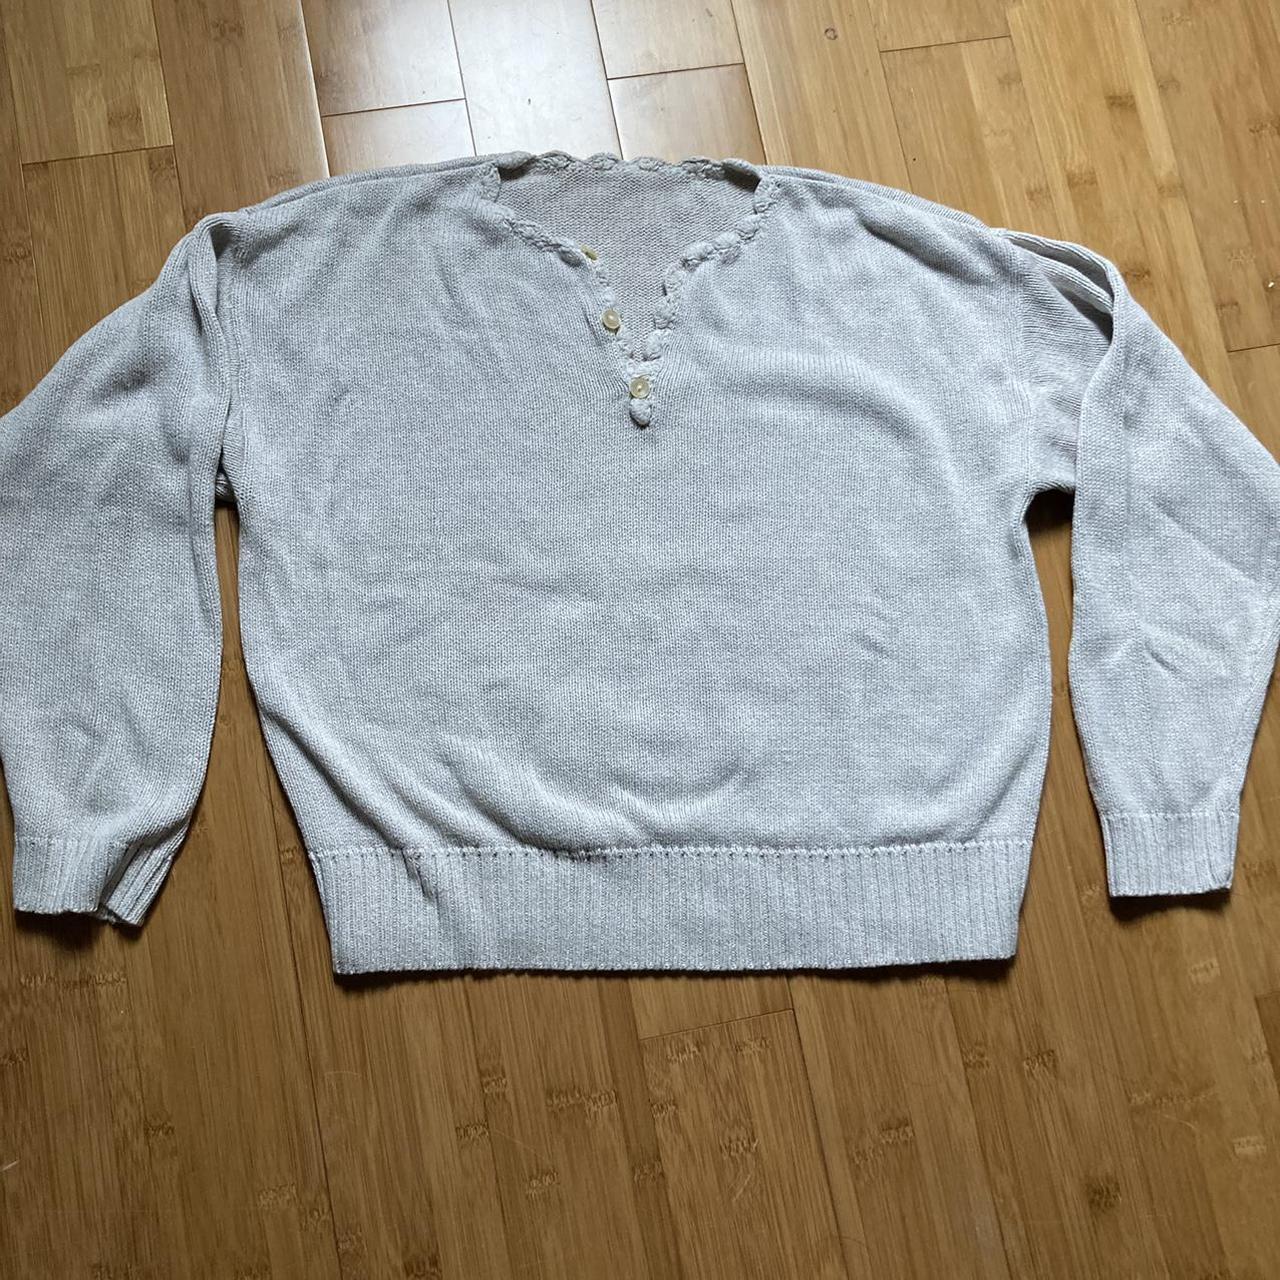 Product Image 1 - Beige sweatshirt with scalloped trim